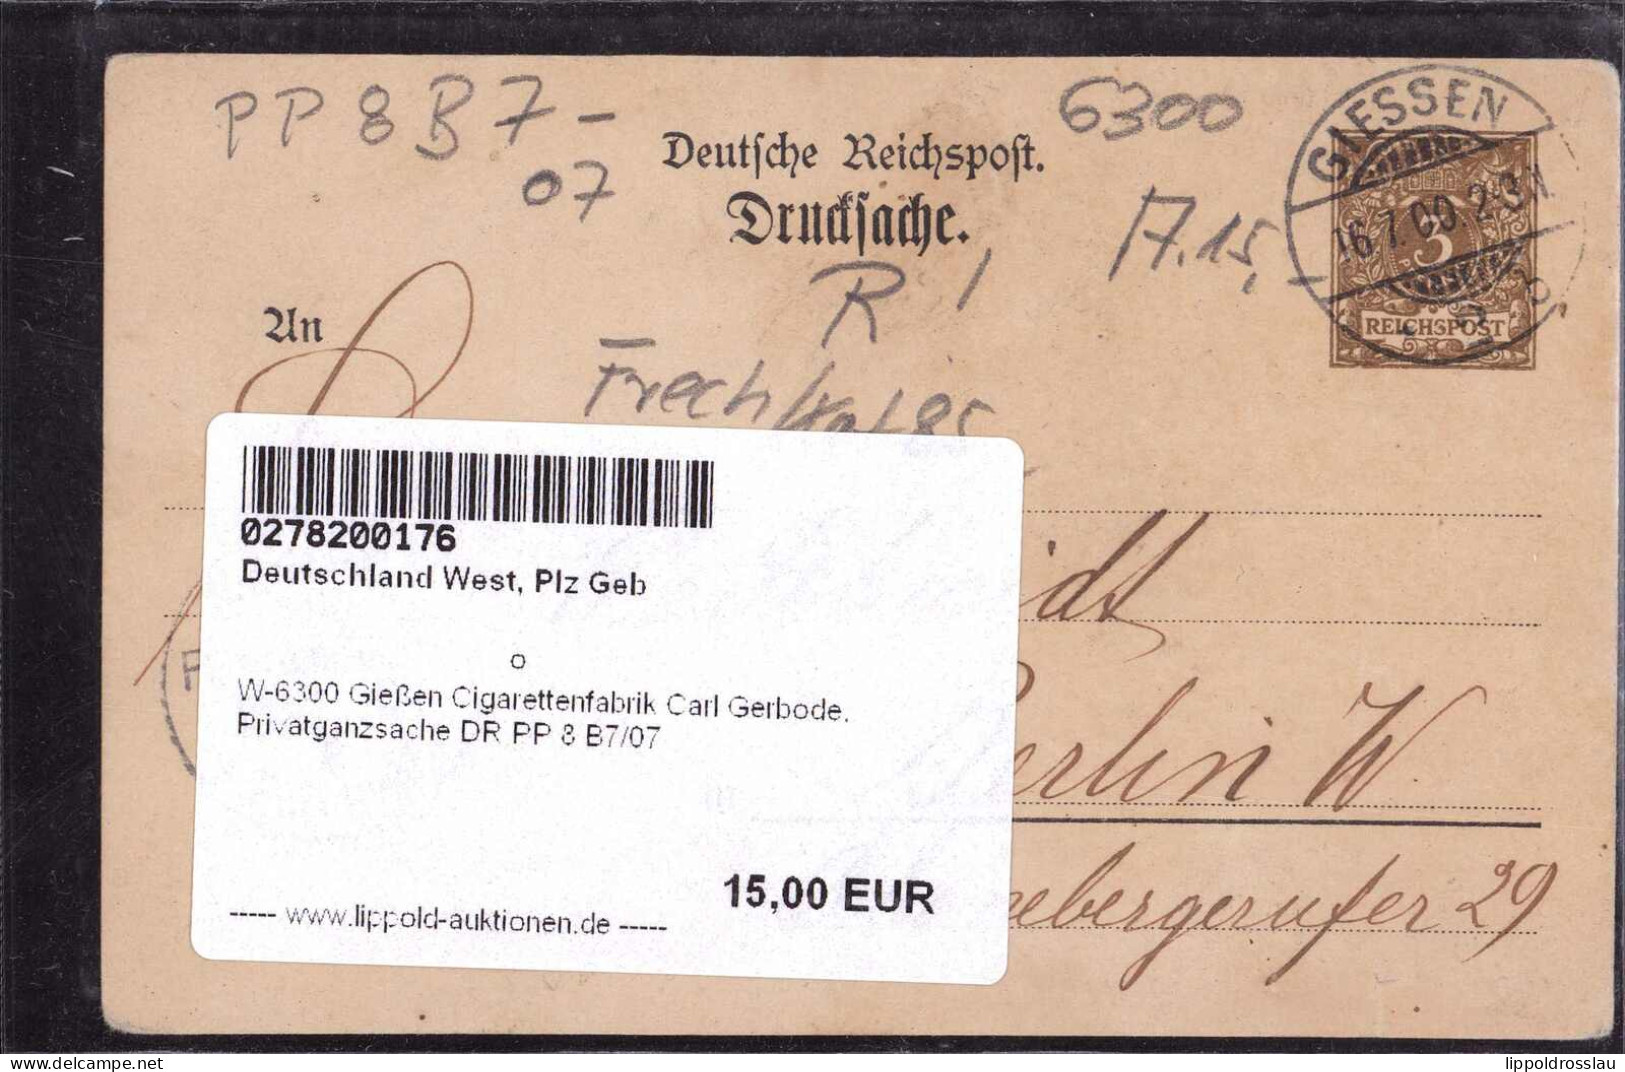 Gest. W-6300 Gießen Cigarettenfabrik Carl Gerbode, Privatganzsache DR PP 8 B7/07 - Giessen